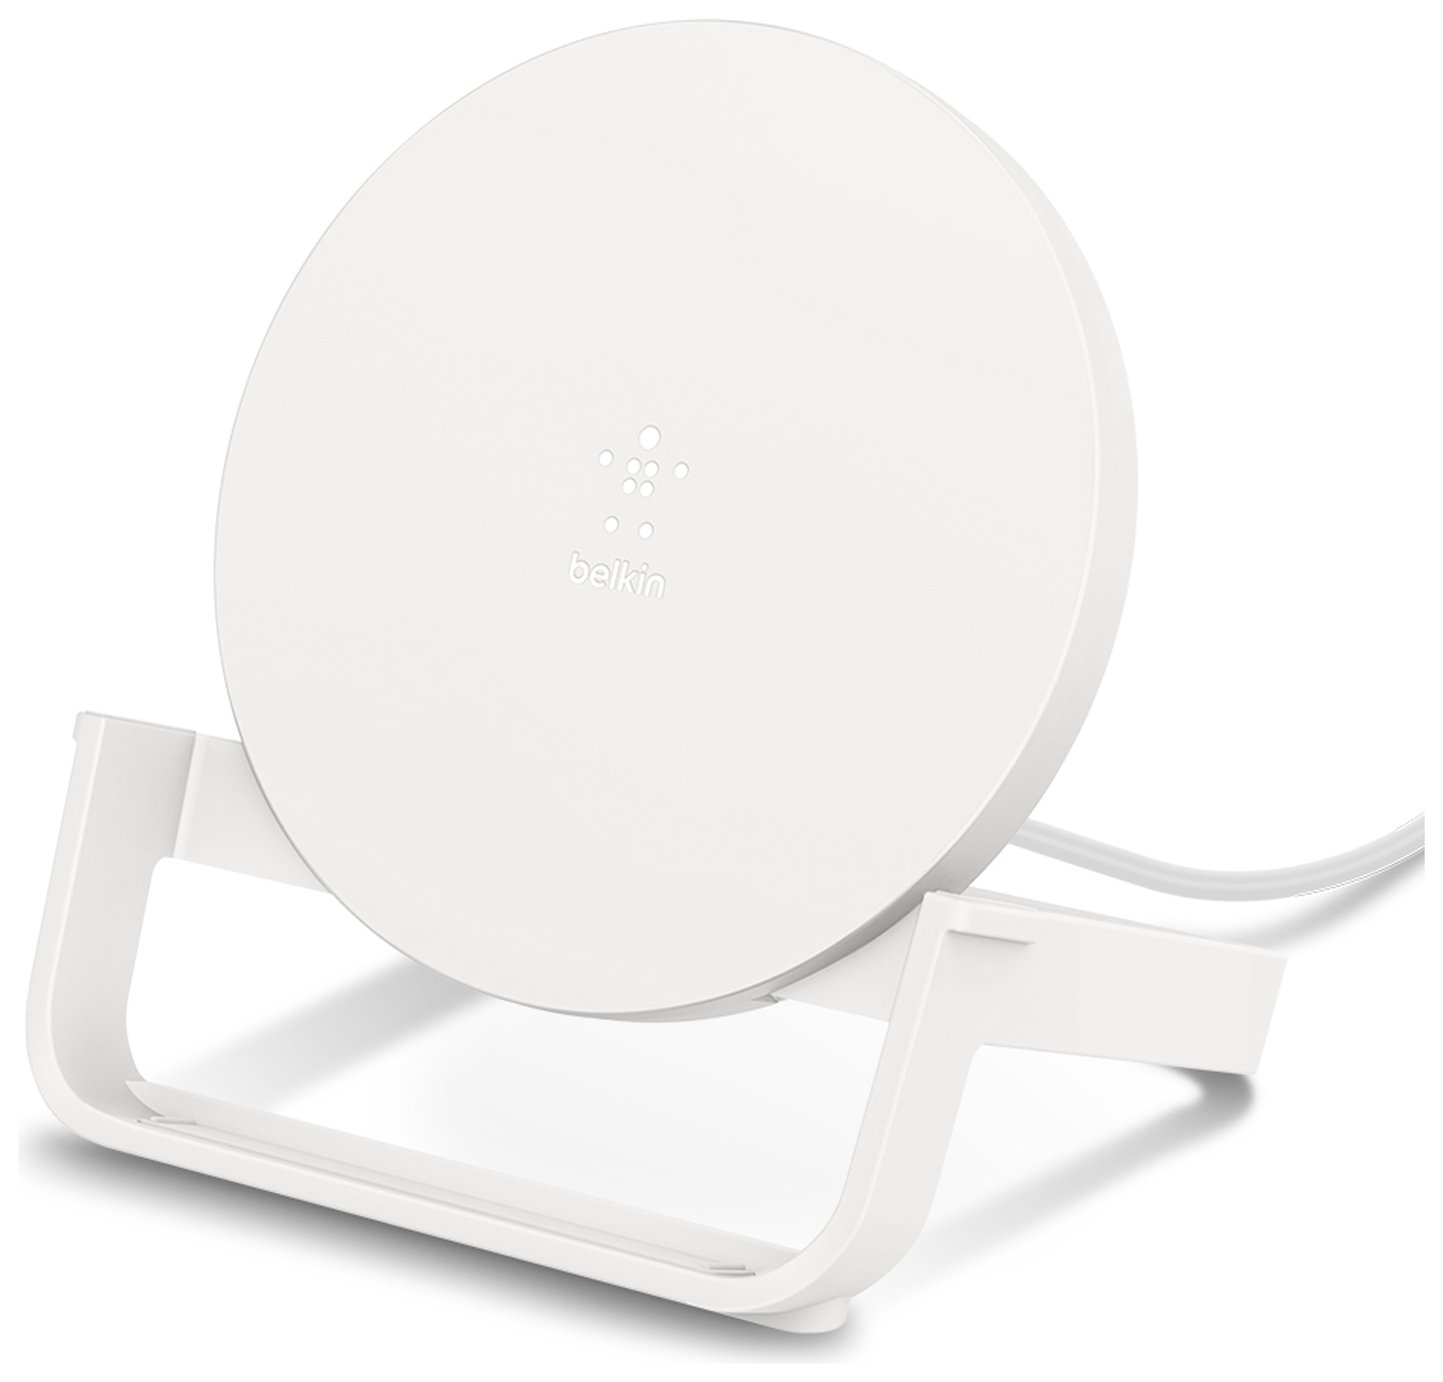 Belkin Qi Certified 10W Wireless Charging Stand - White